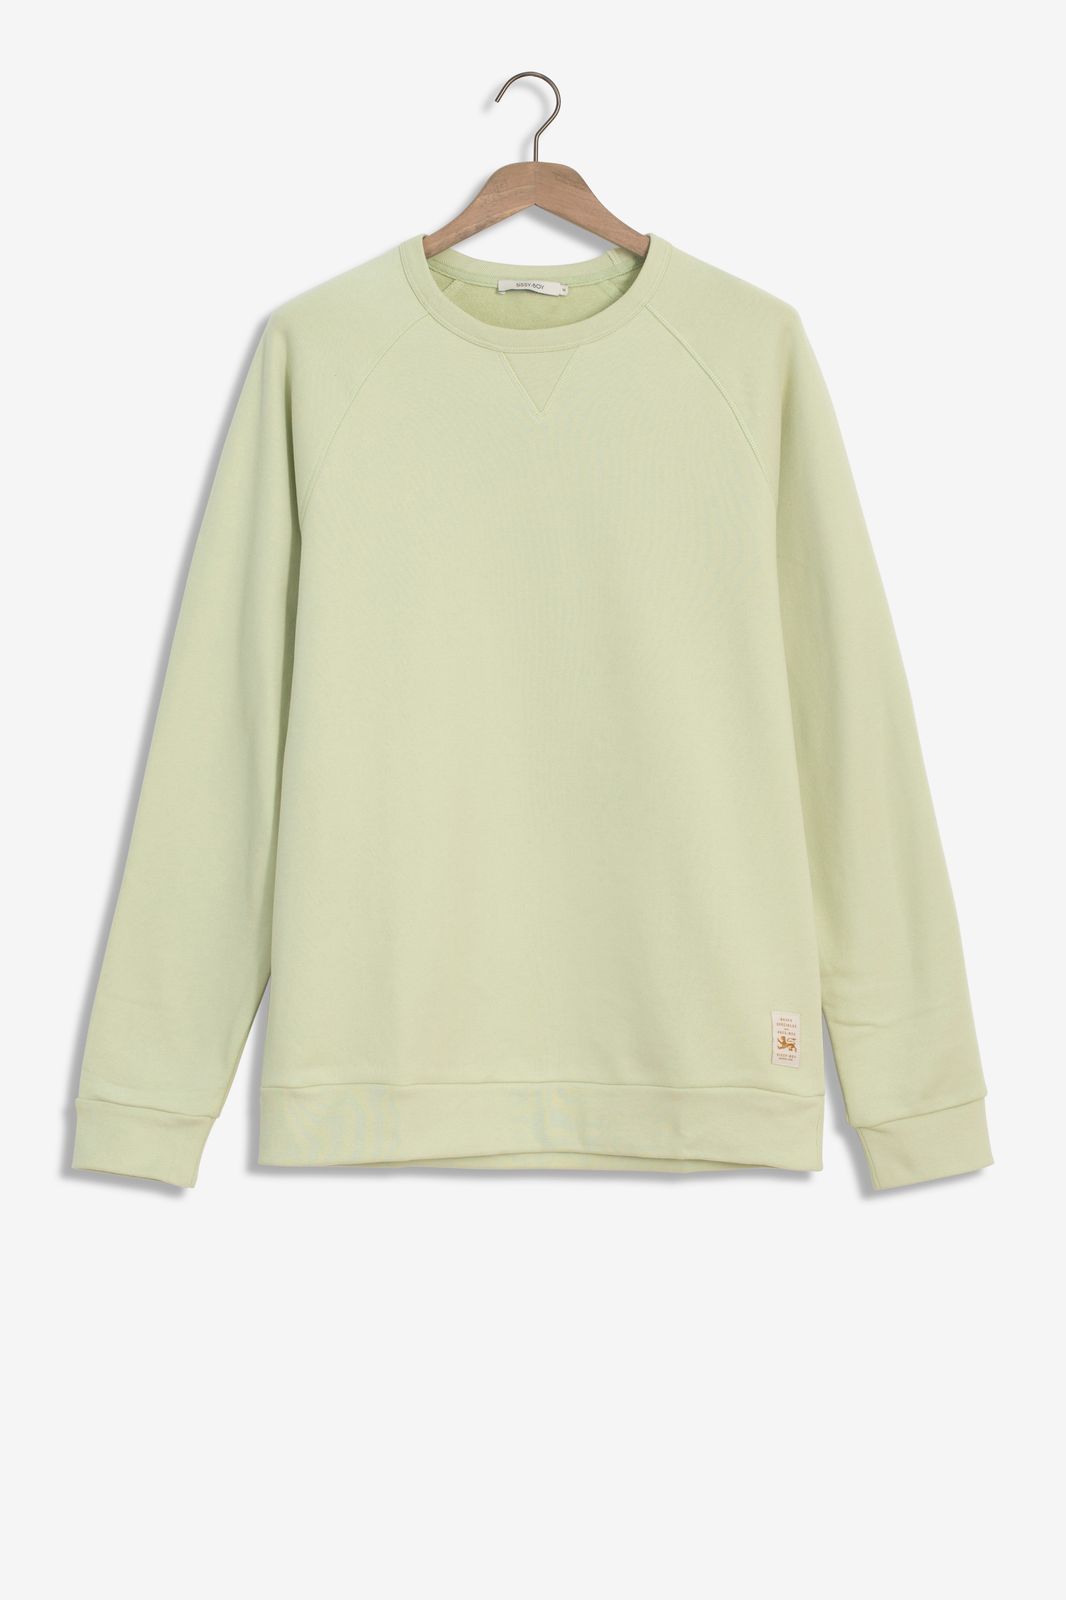 Baumwoll-Sweater - hellgrün